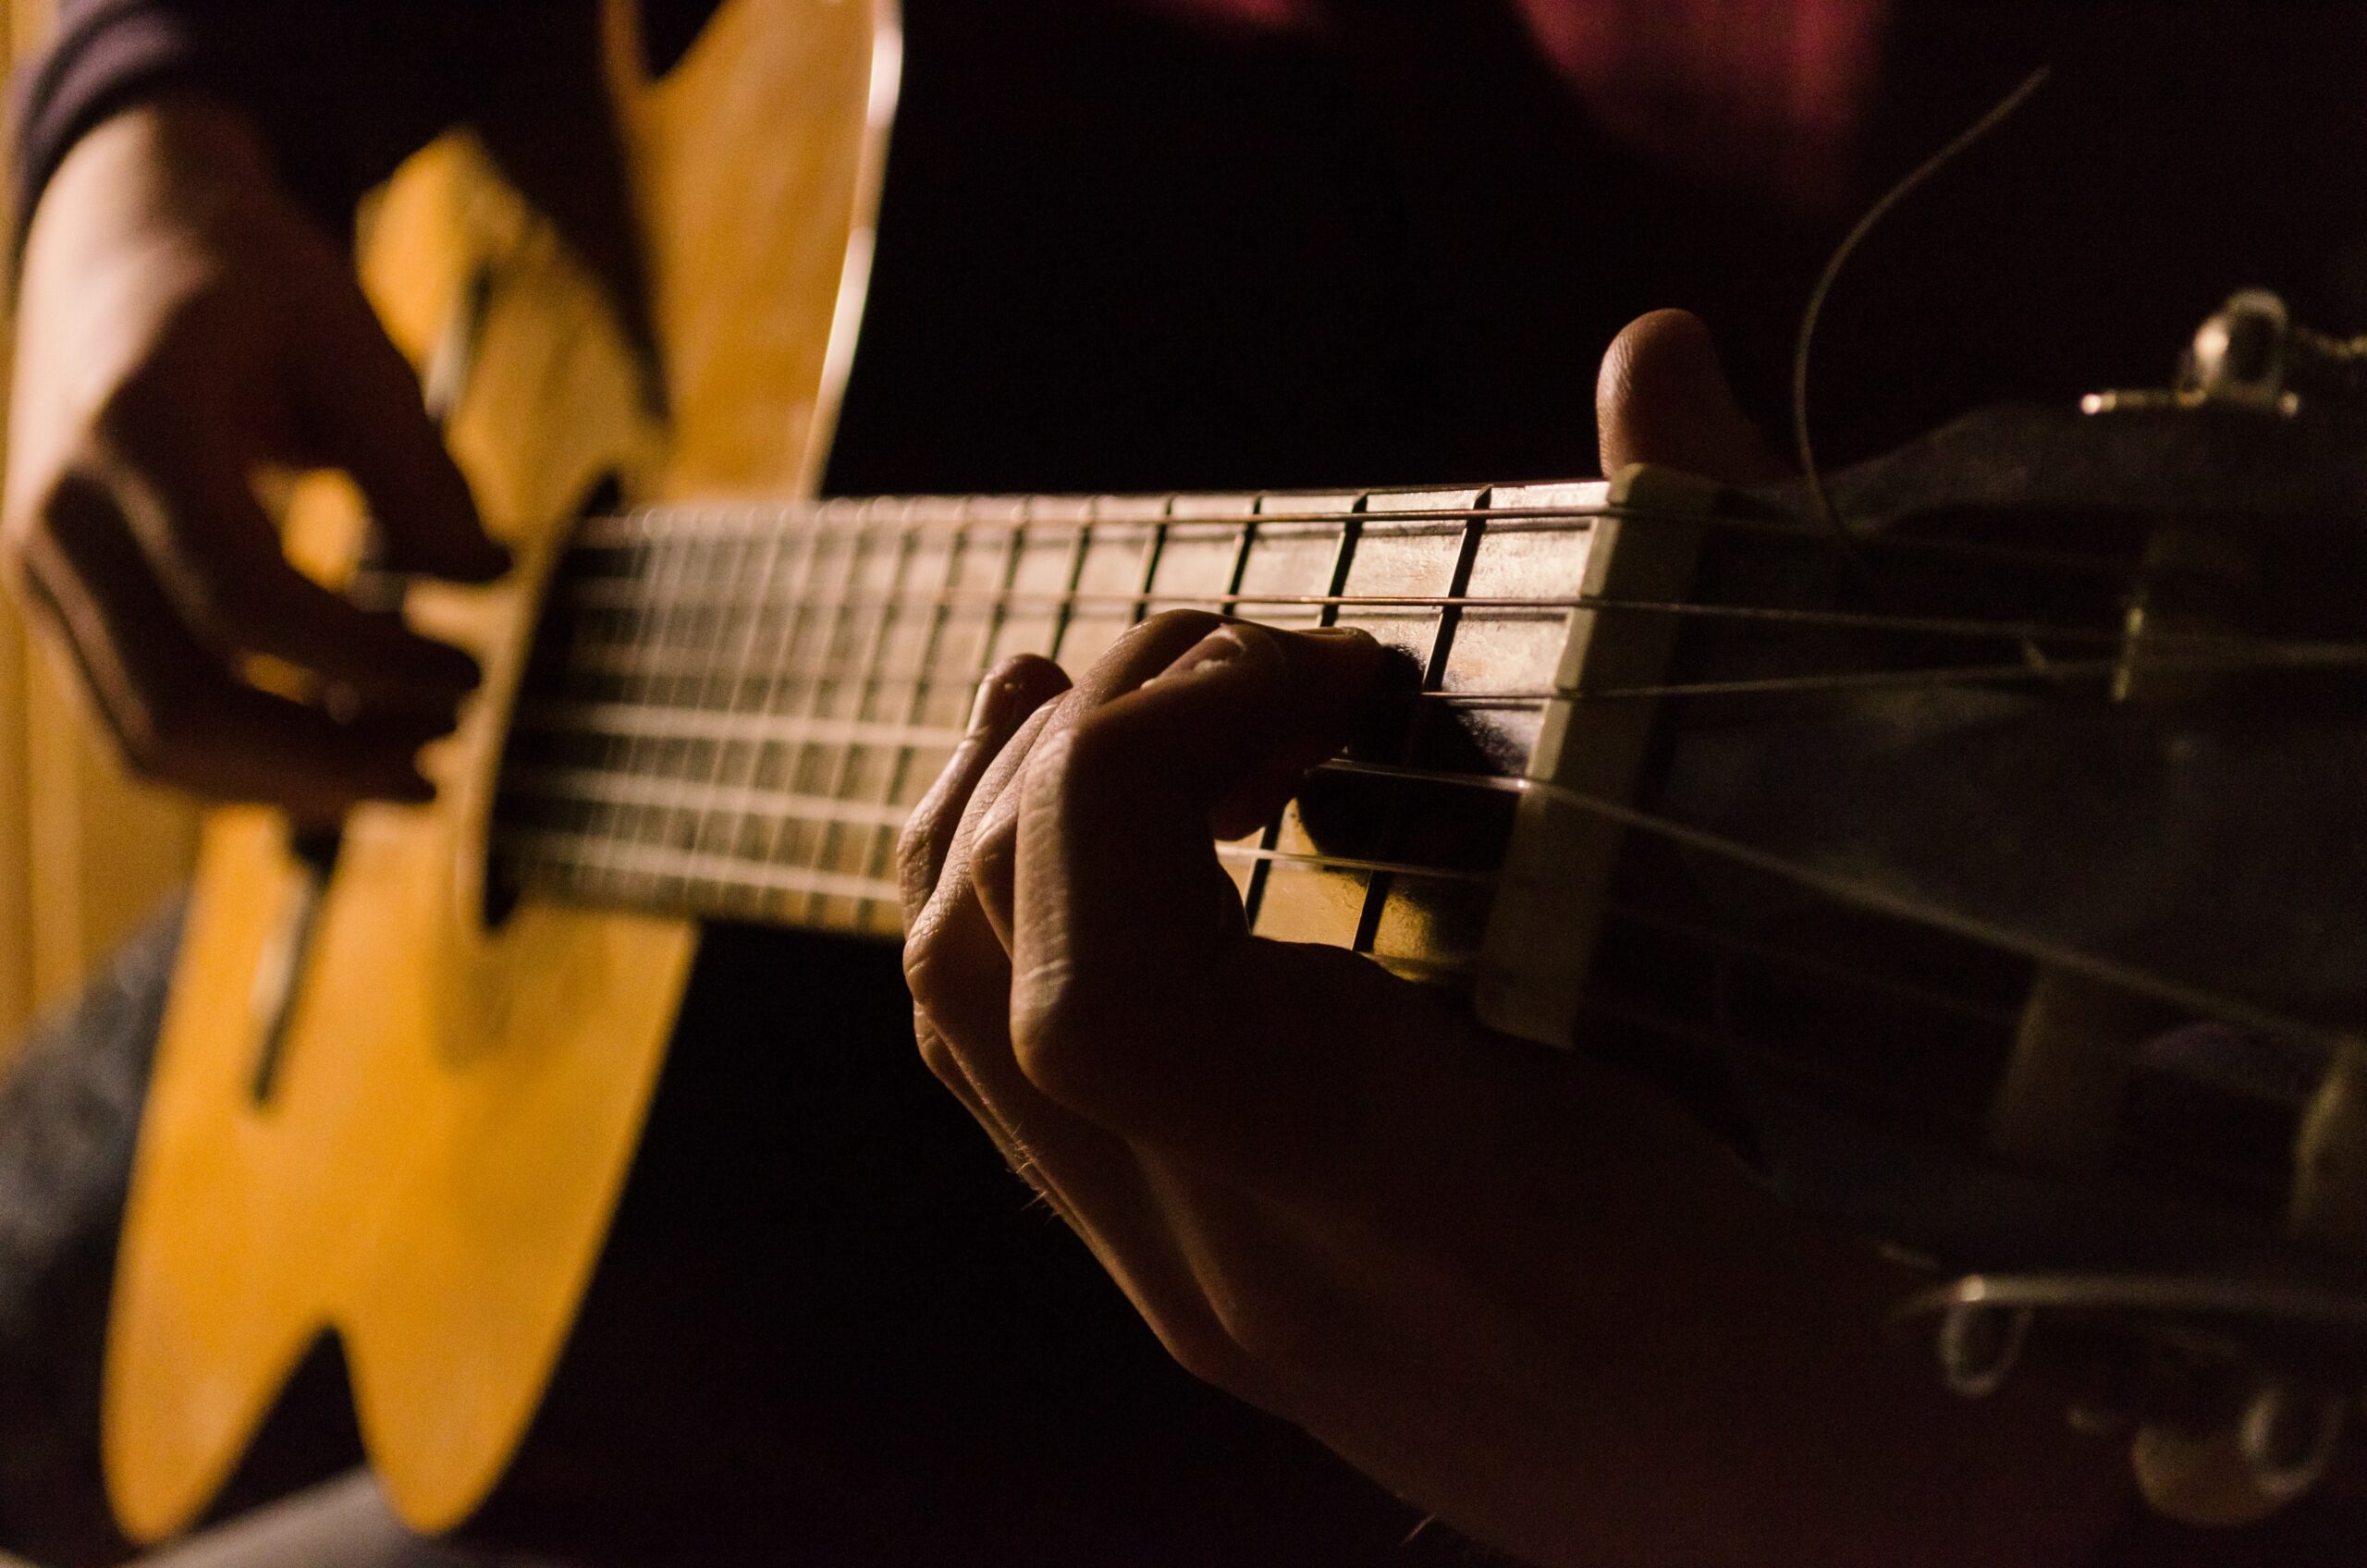 Más de 10 artistas participarán de este Ensamble de guitarras en Ambato.